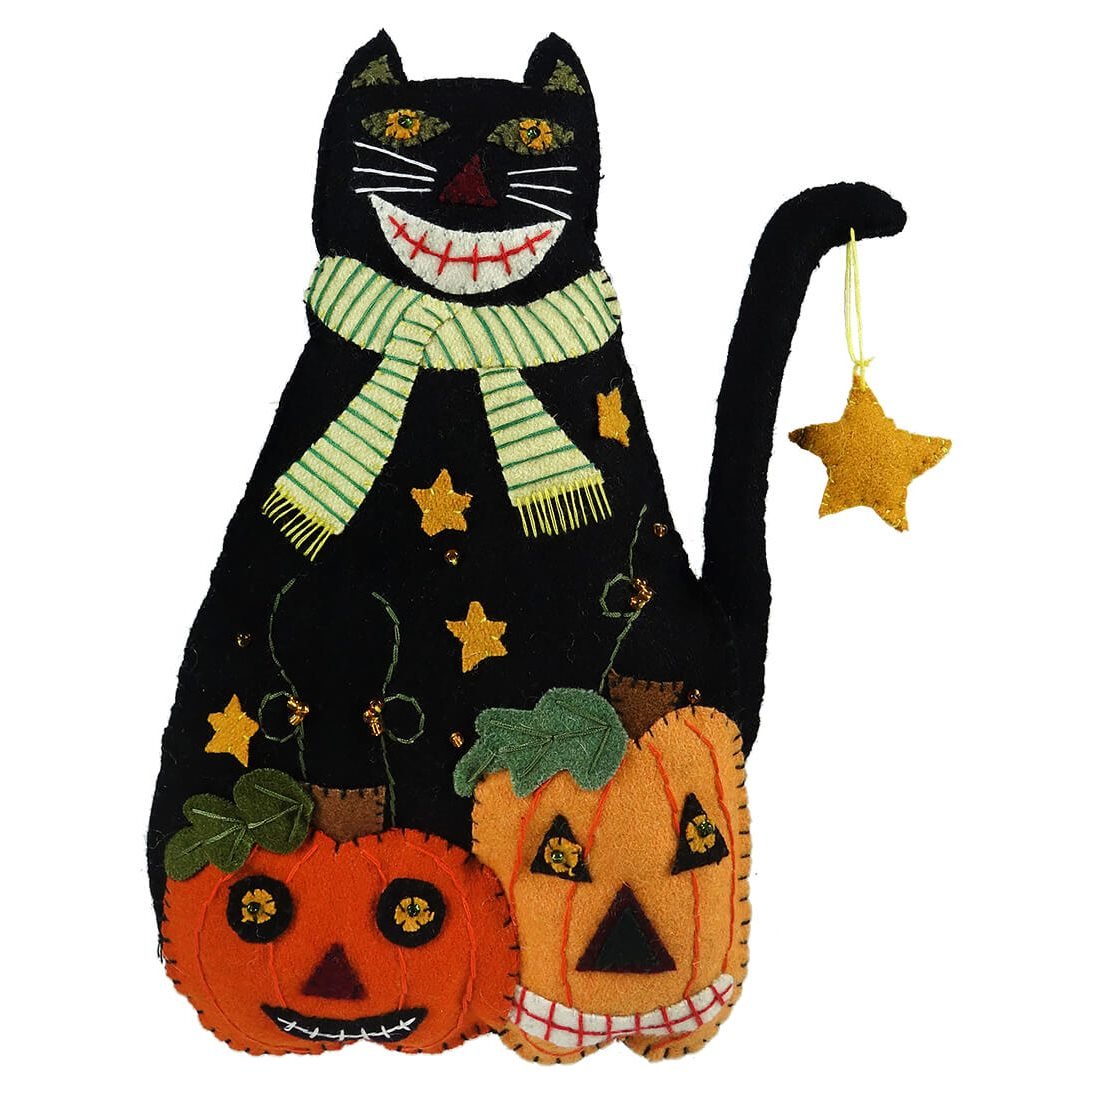 Black Cat with Pumpkins Halloween Ornament